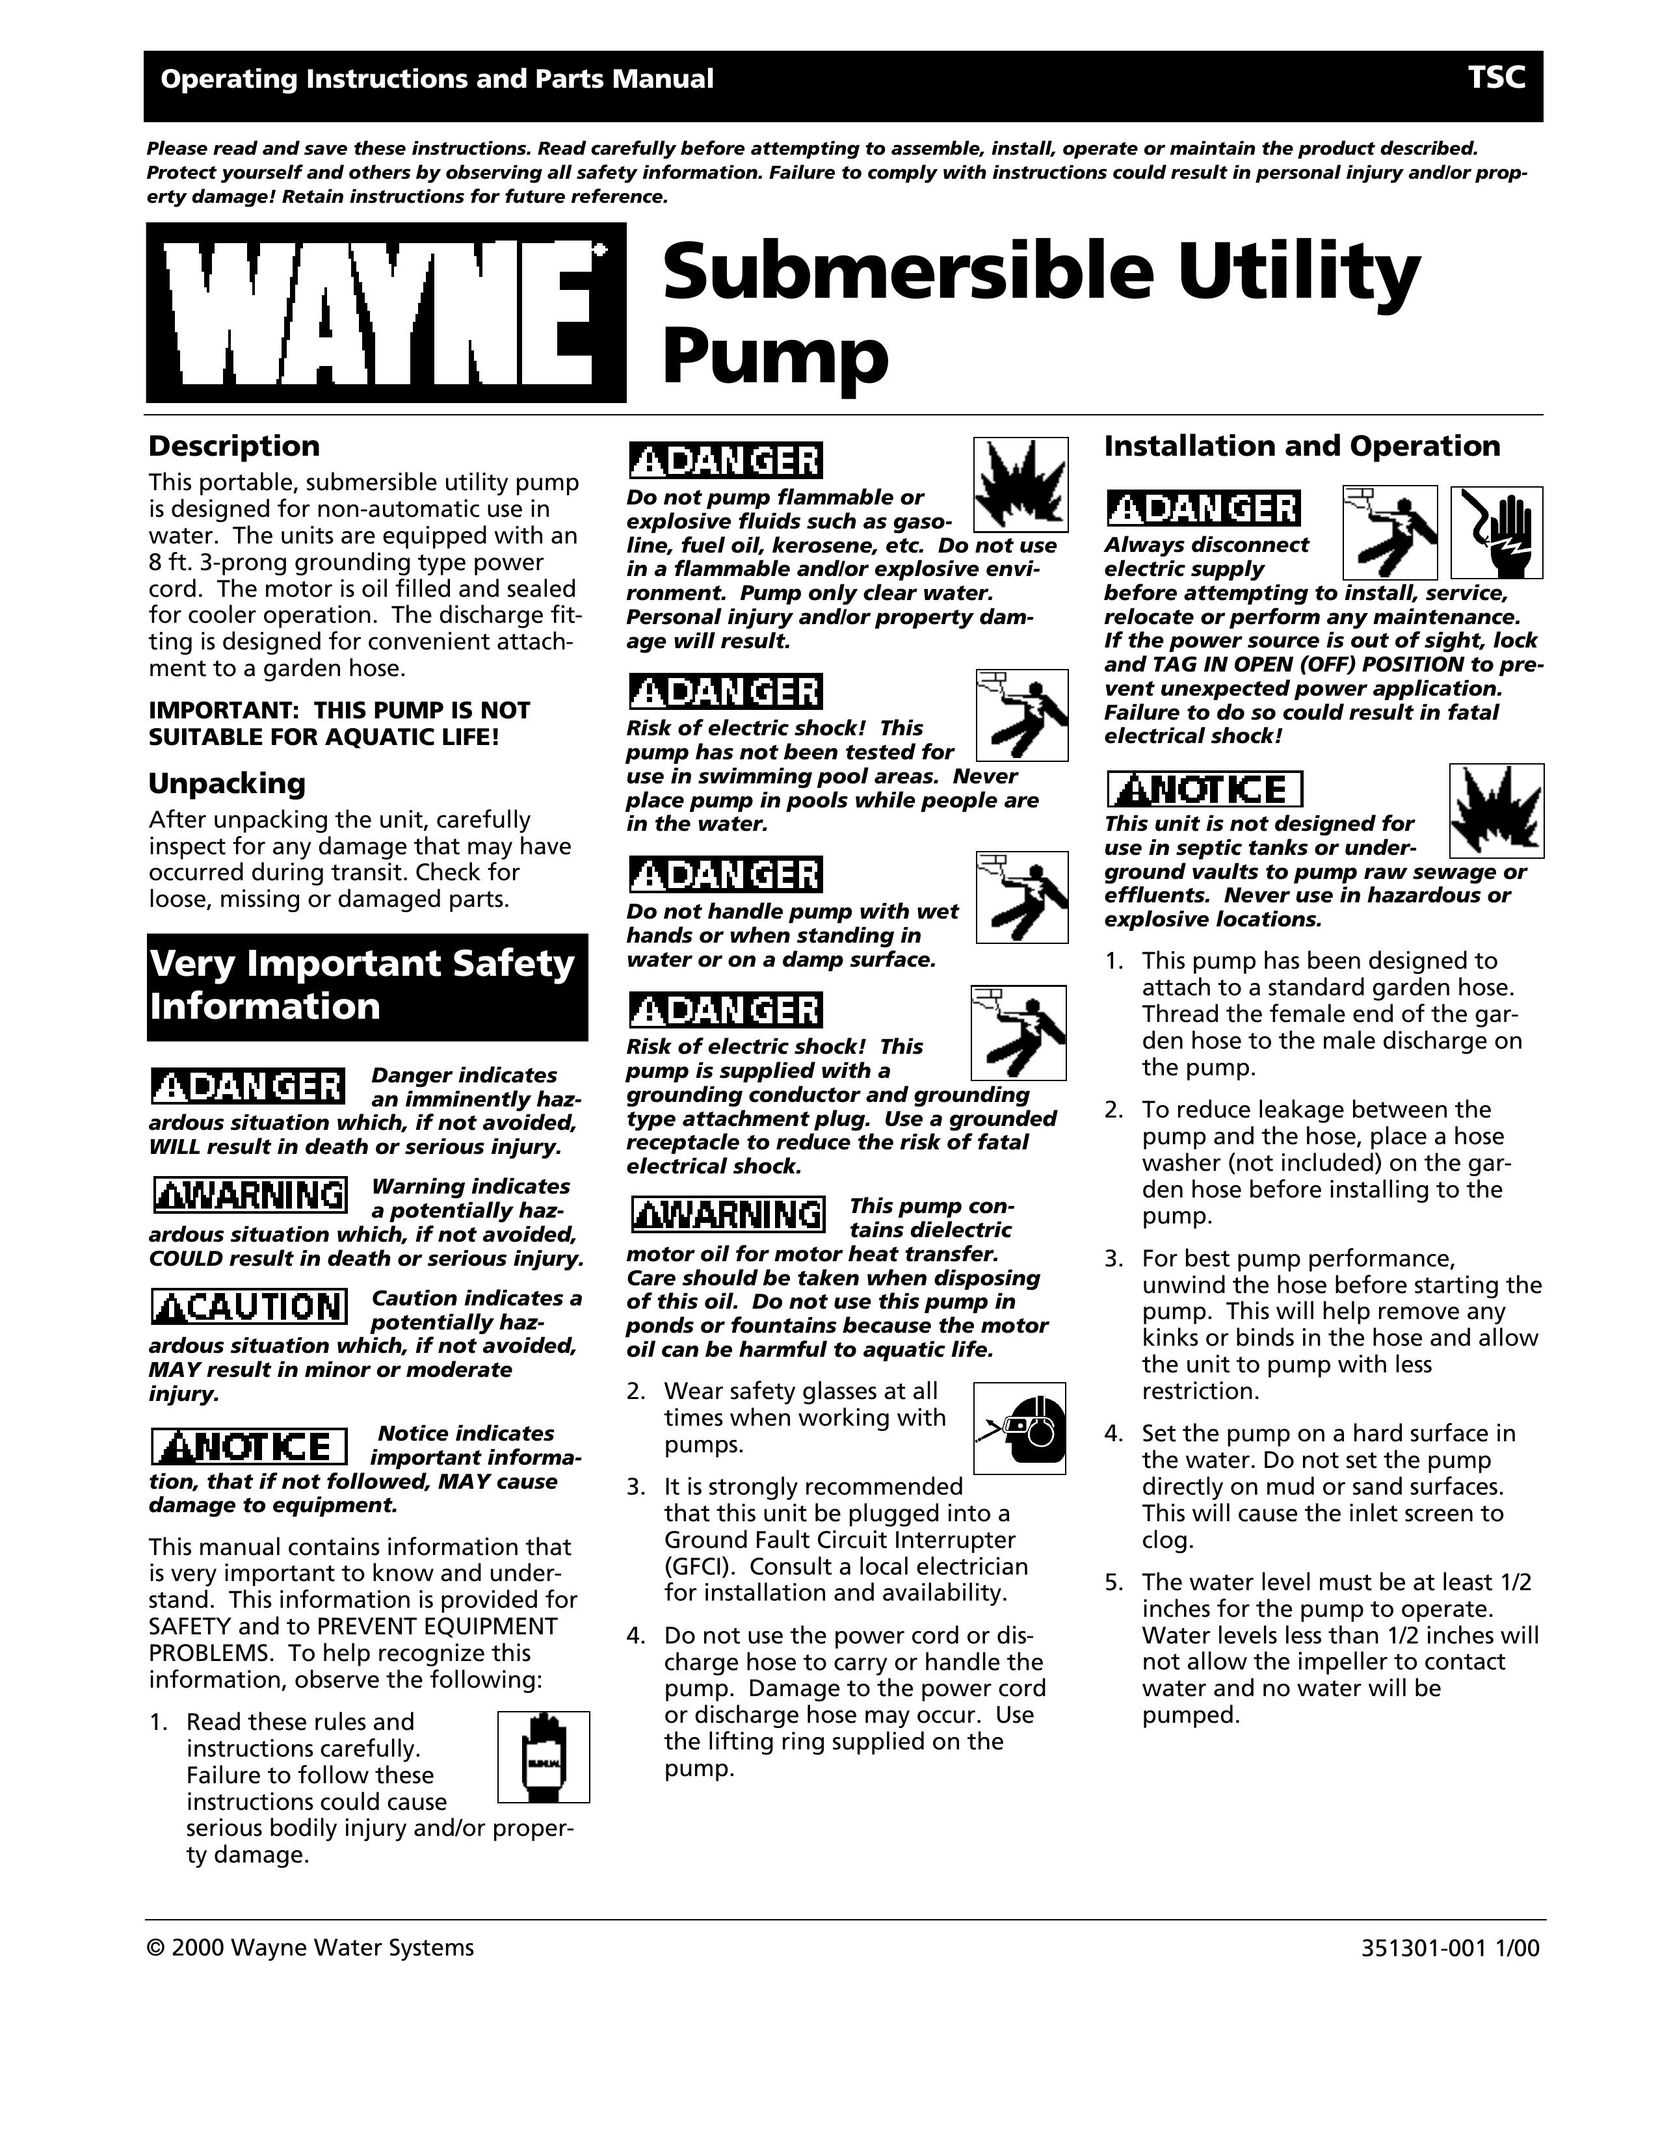 Wayne TSC Septic System User Manual